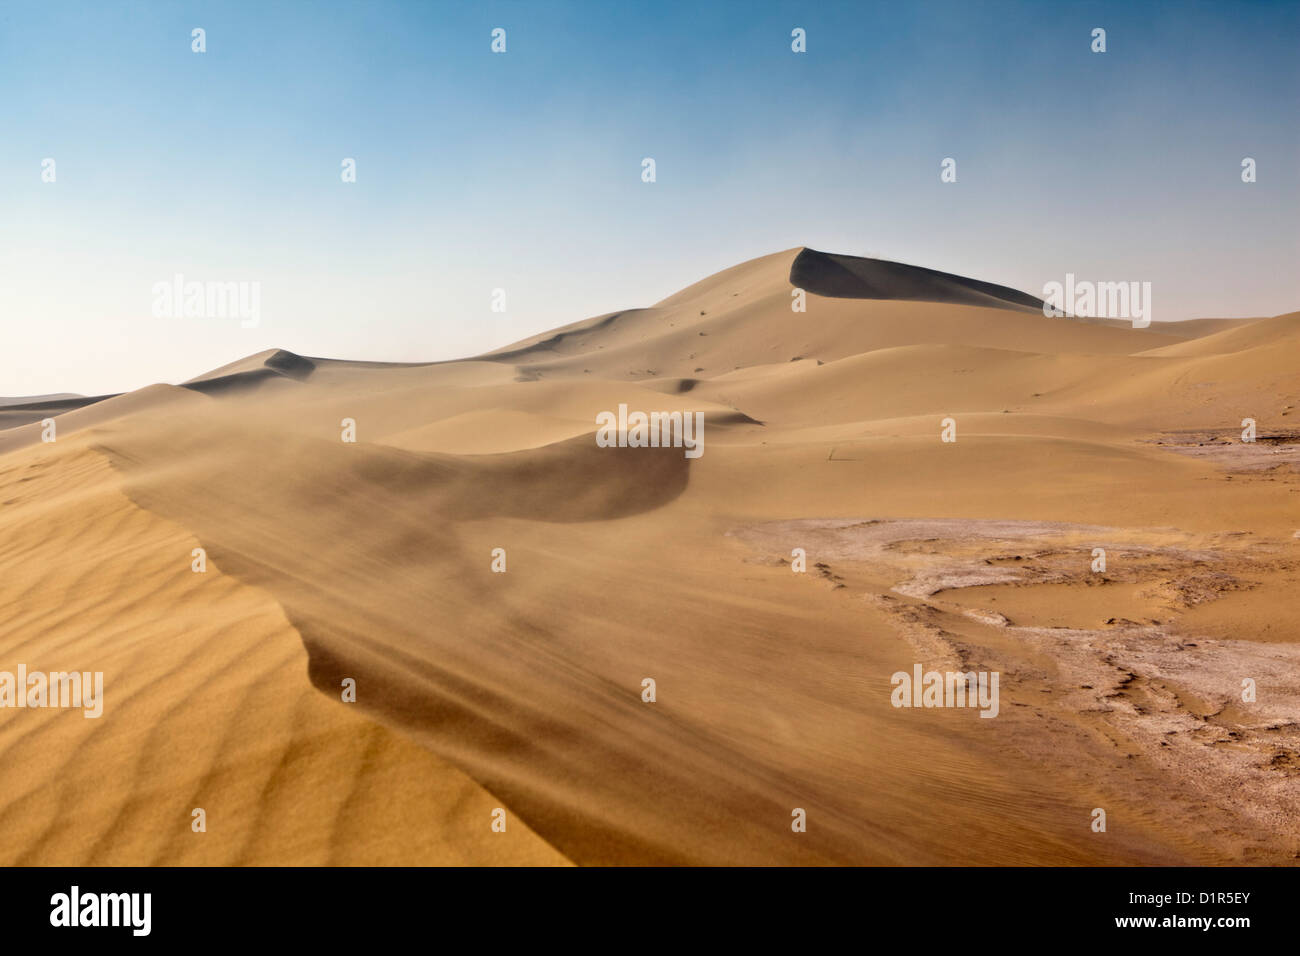 Morocco M Hamid Erg Chigaga Sand Dunes Sahara Desert Sand Storm Stock Photo Alamy